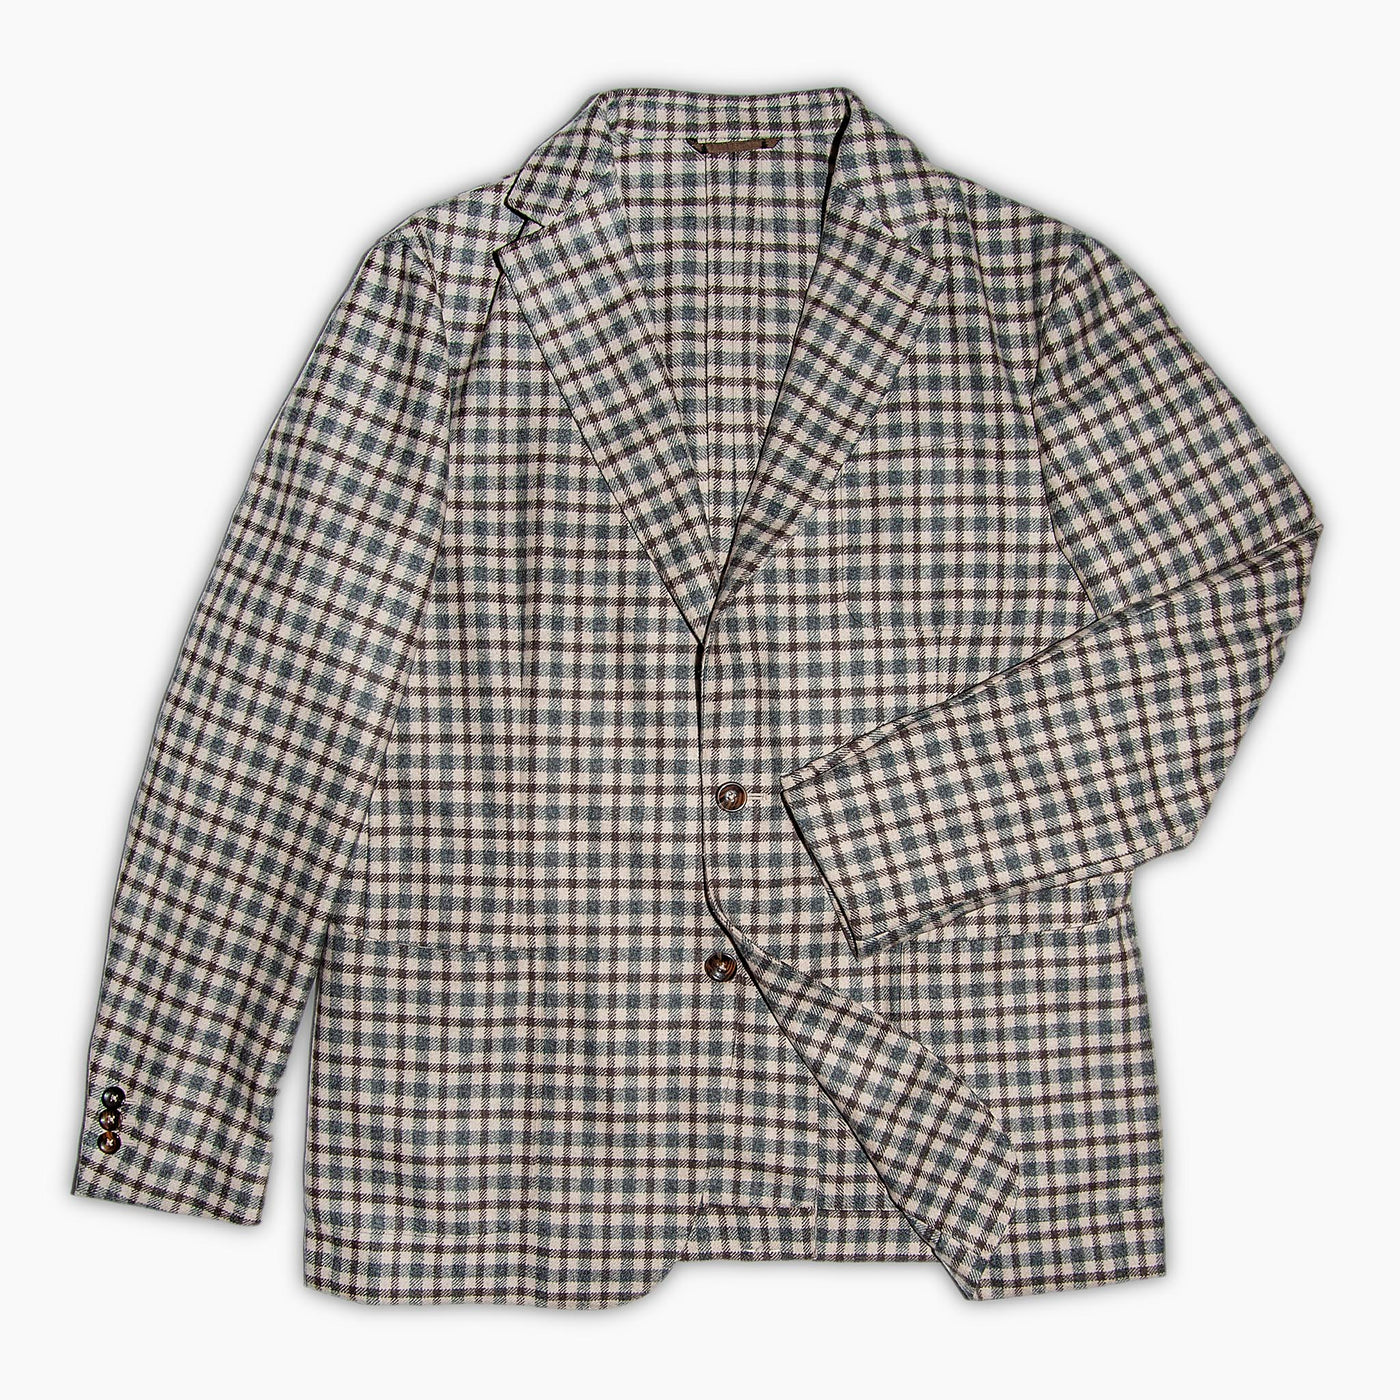 Bernat blazer flannel soft check 100% cashmere (Cream grey and brown)